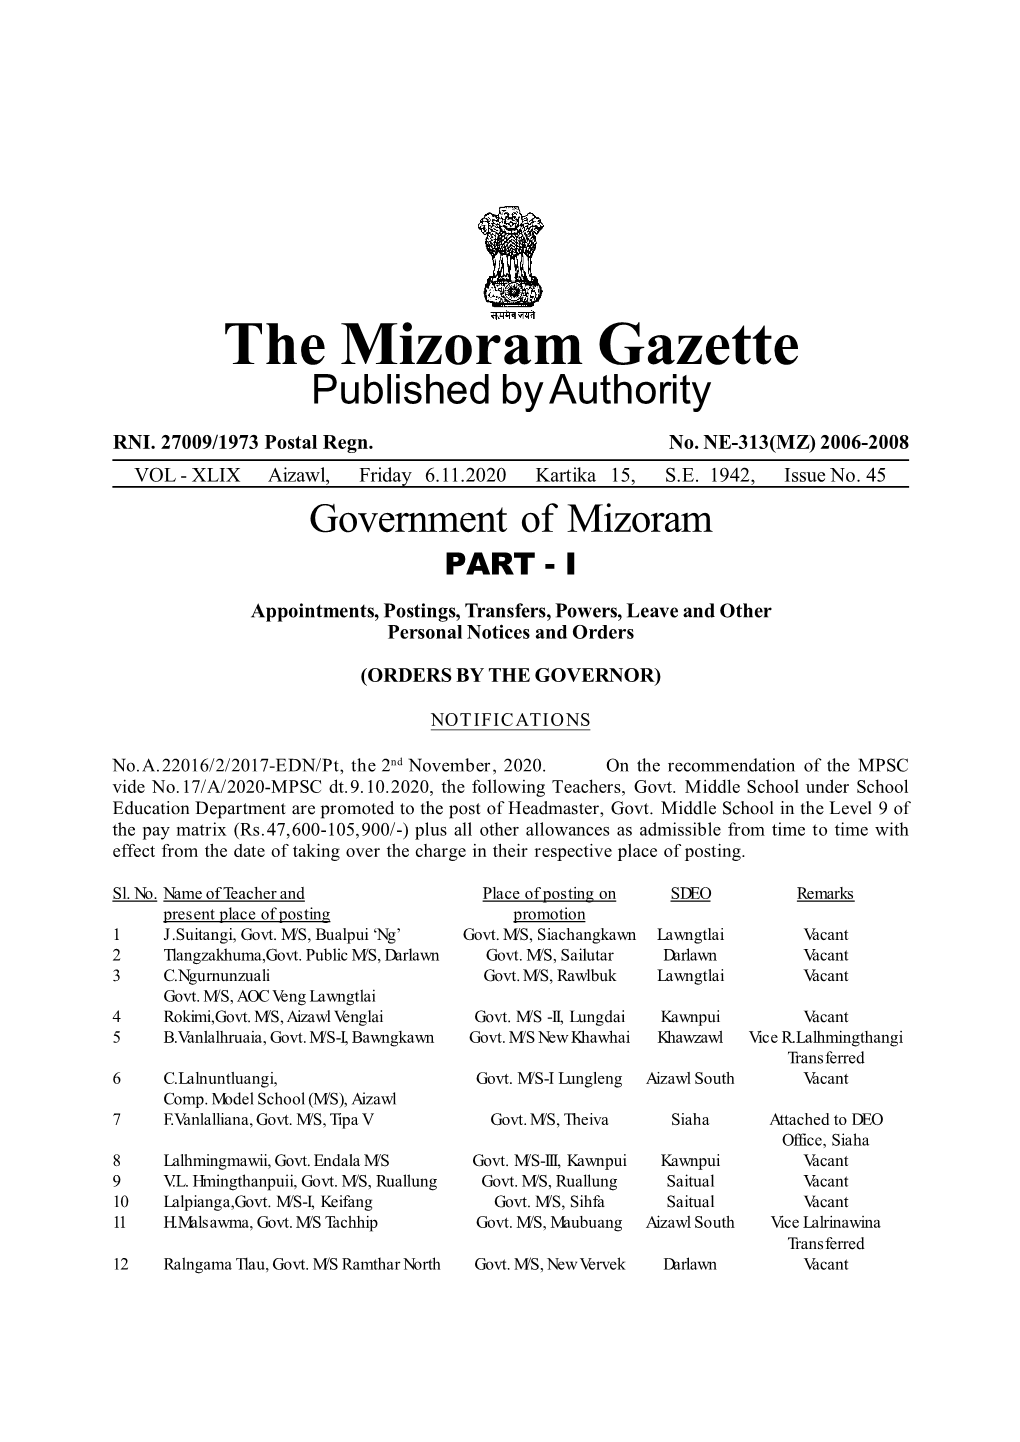 The Mizoram Gazette Published by Authority RNI